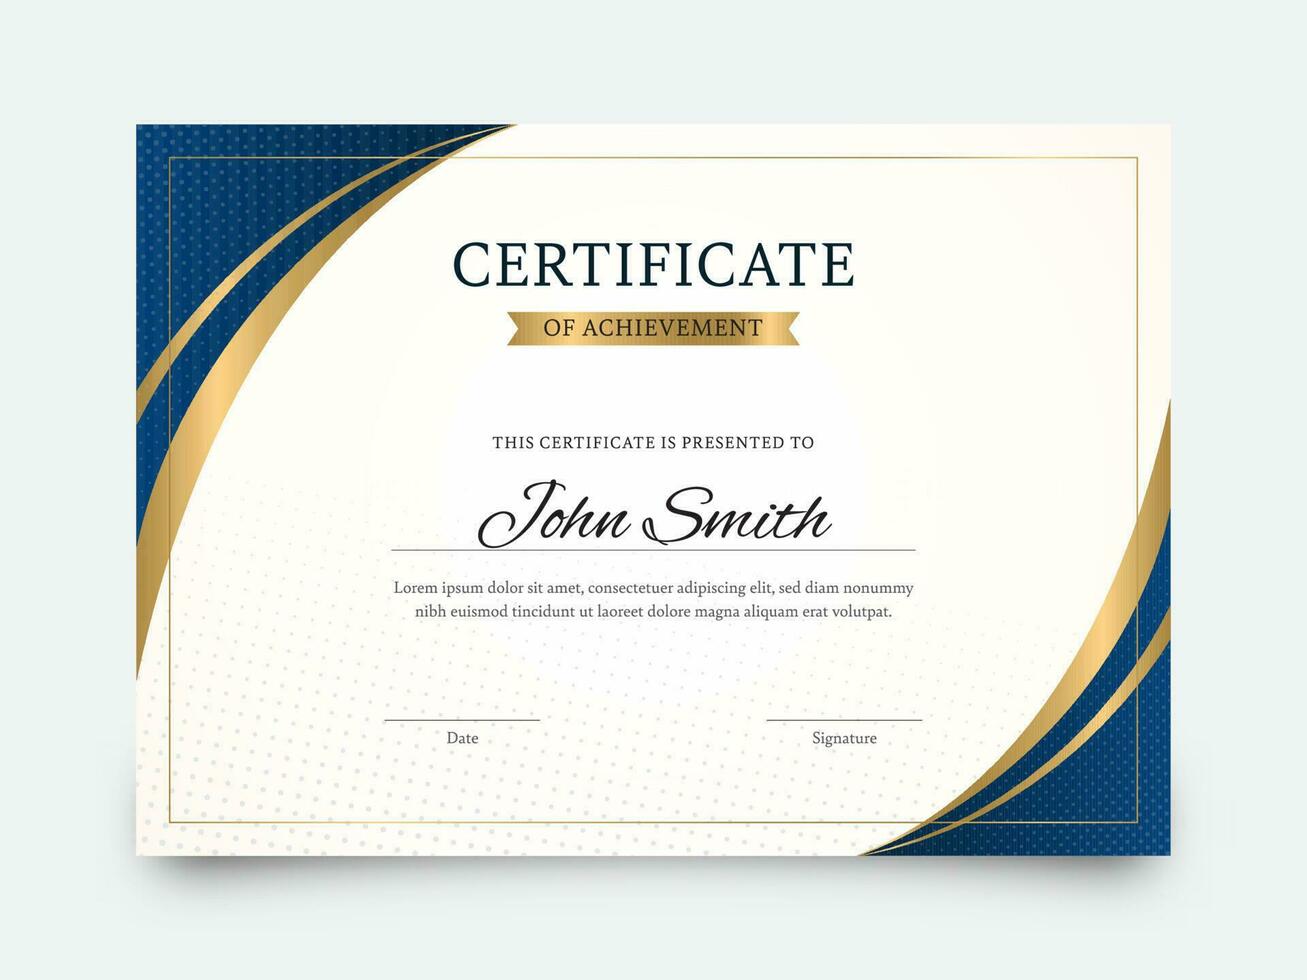 Horizontal Certificate Of Achievement Template Design. vector